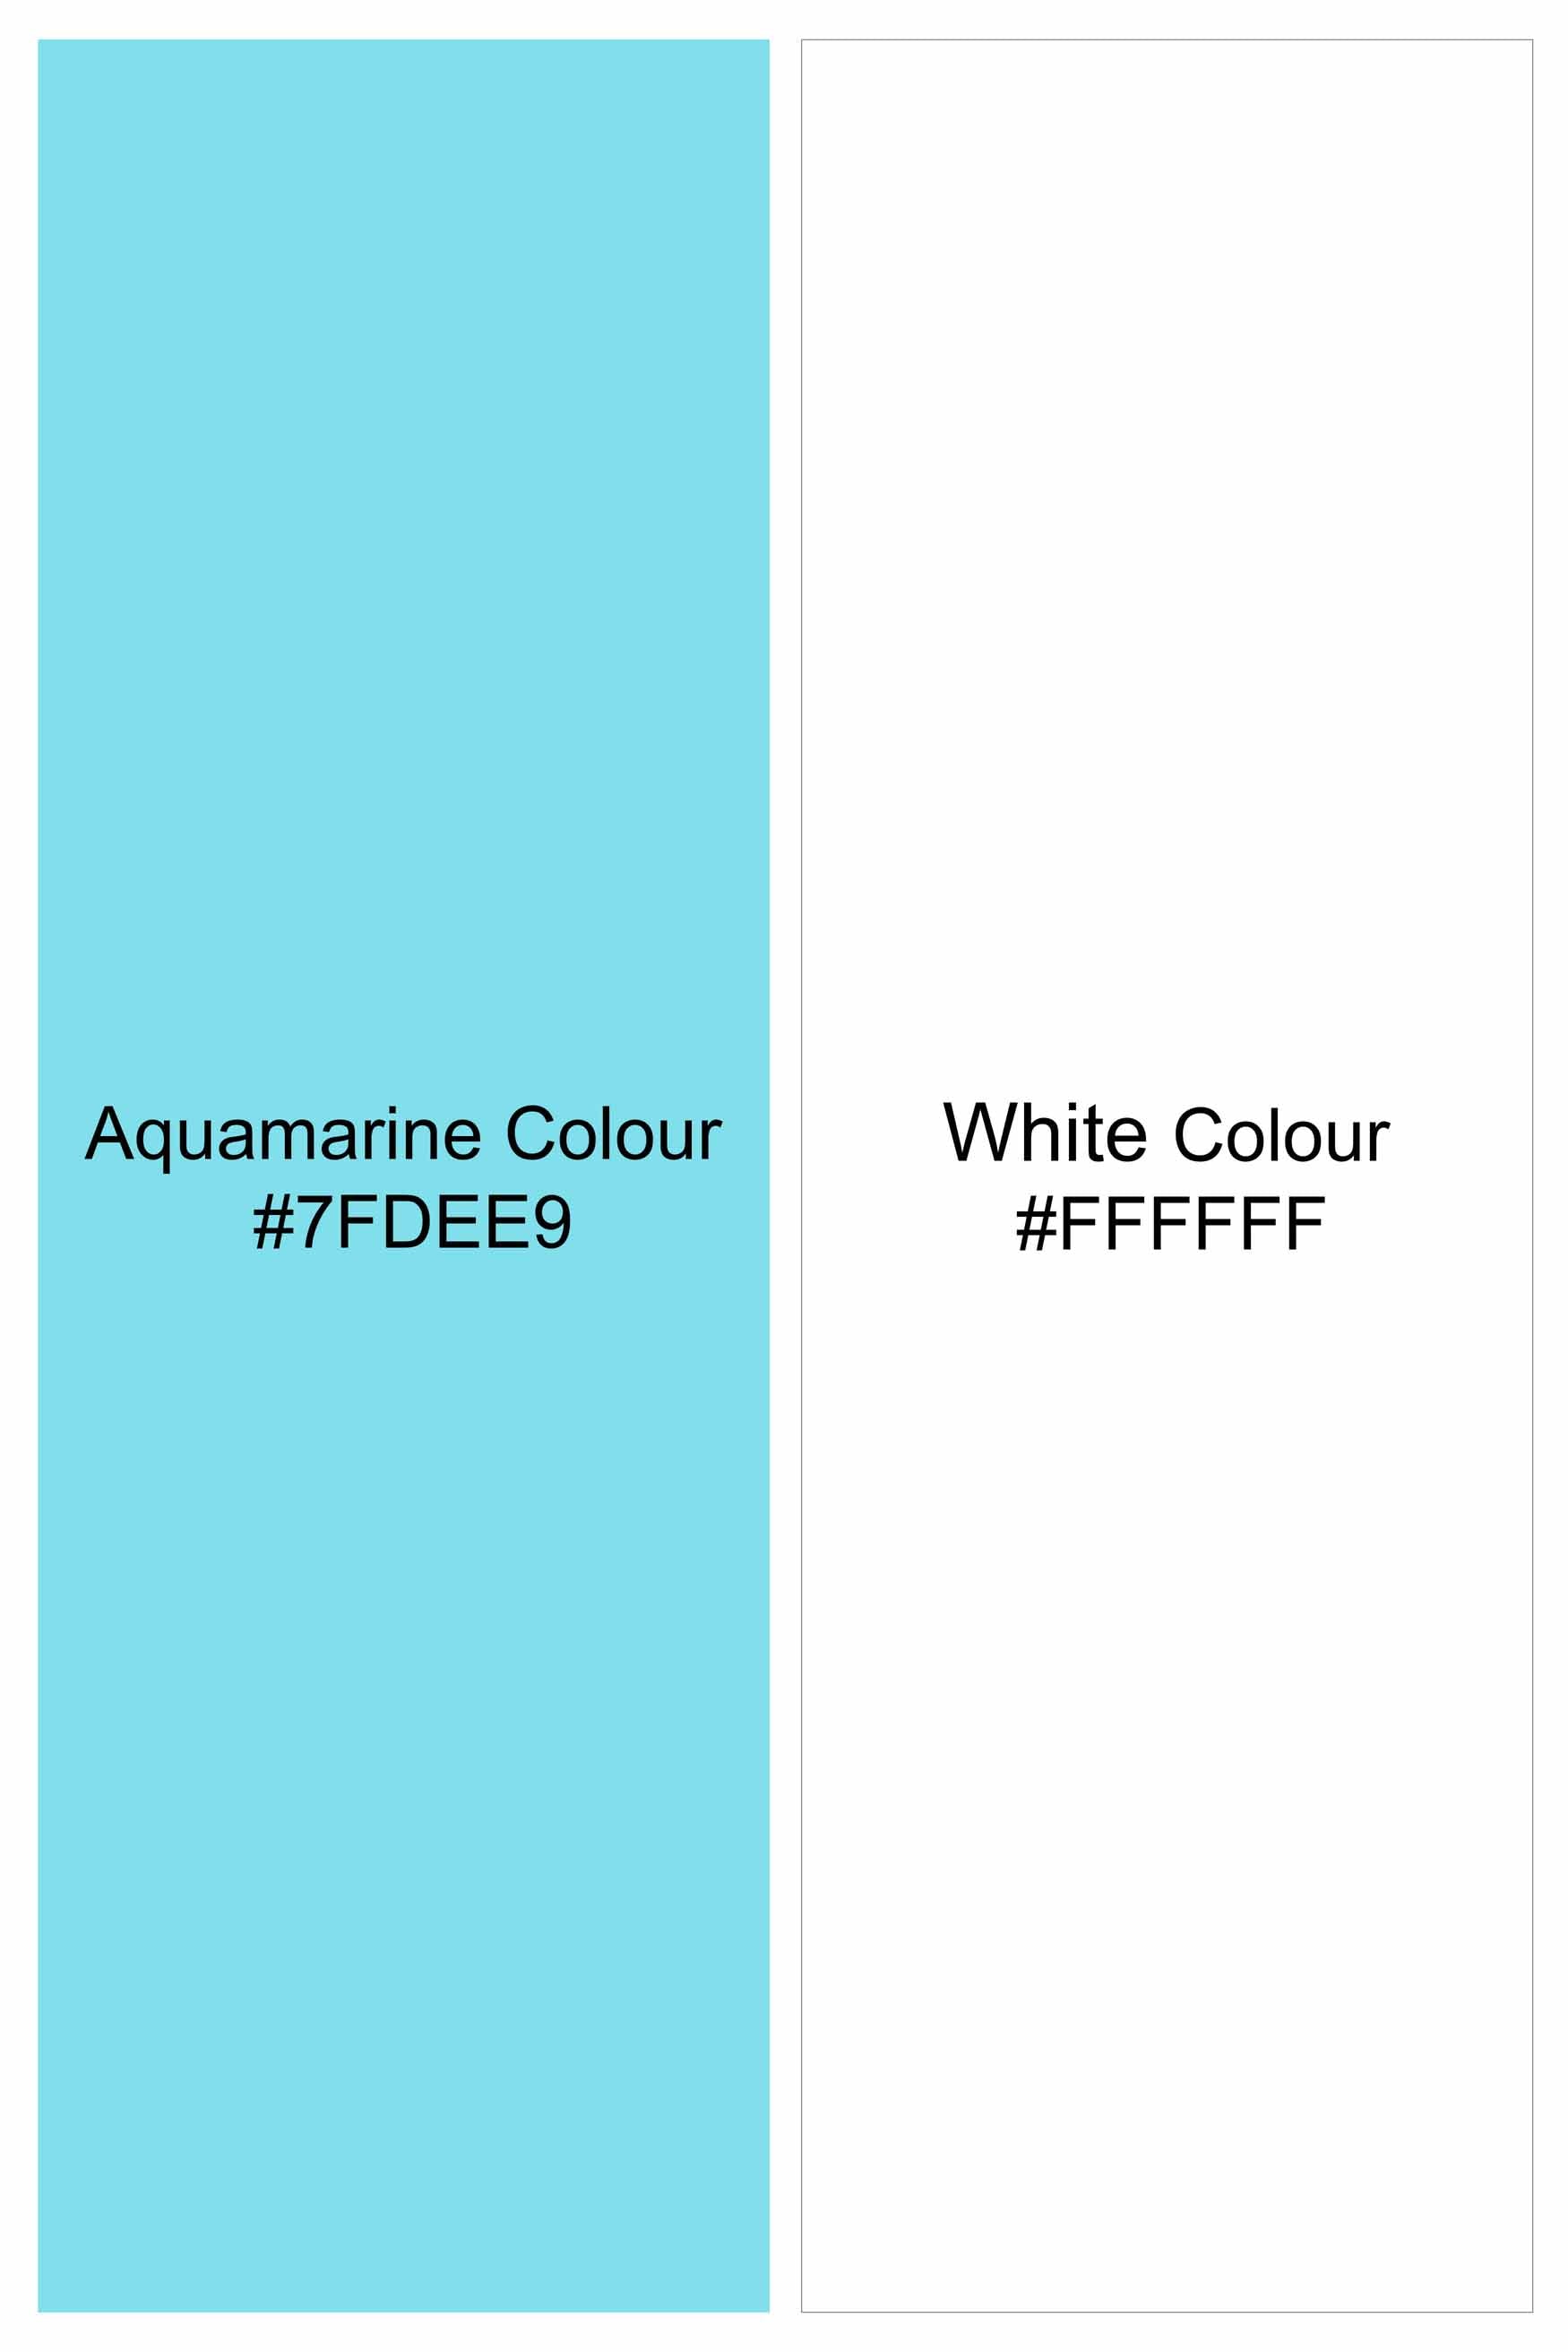 Aquamarine Blue and White Striped Hand Painted Premium Tencel Designer Shirt 6424-M-ART-38, 6424-M-ART-H-38, 6424-M-ART-39, 6424-M-ART-H-39, 6424-M-ART-40, 6424-M-ART-H-40, 6424-M-ART-42, 6424-M-ART-H-42, 6424-M-ART-44, 6424-M-ART-H-44, 6424-M-ART-46, 6424-M-ART-H-46, 6424-M-ART-48, 6424-M-ART-H-48, 6424-M-ART-50, 6424-M-ART-H-50, 6424-M-ART-52, 6424-M-ART-H-52